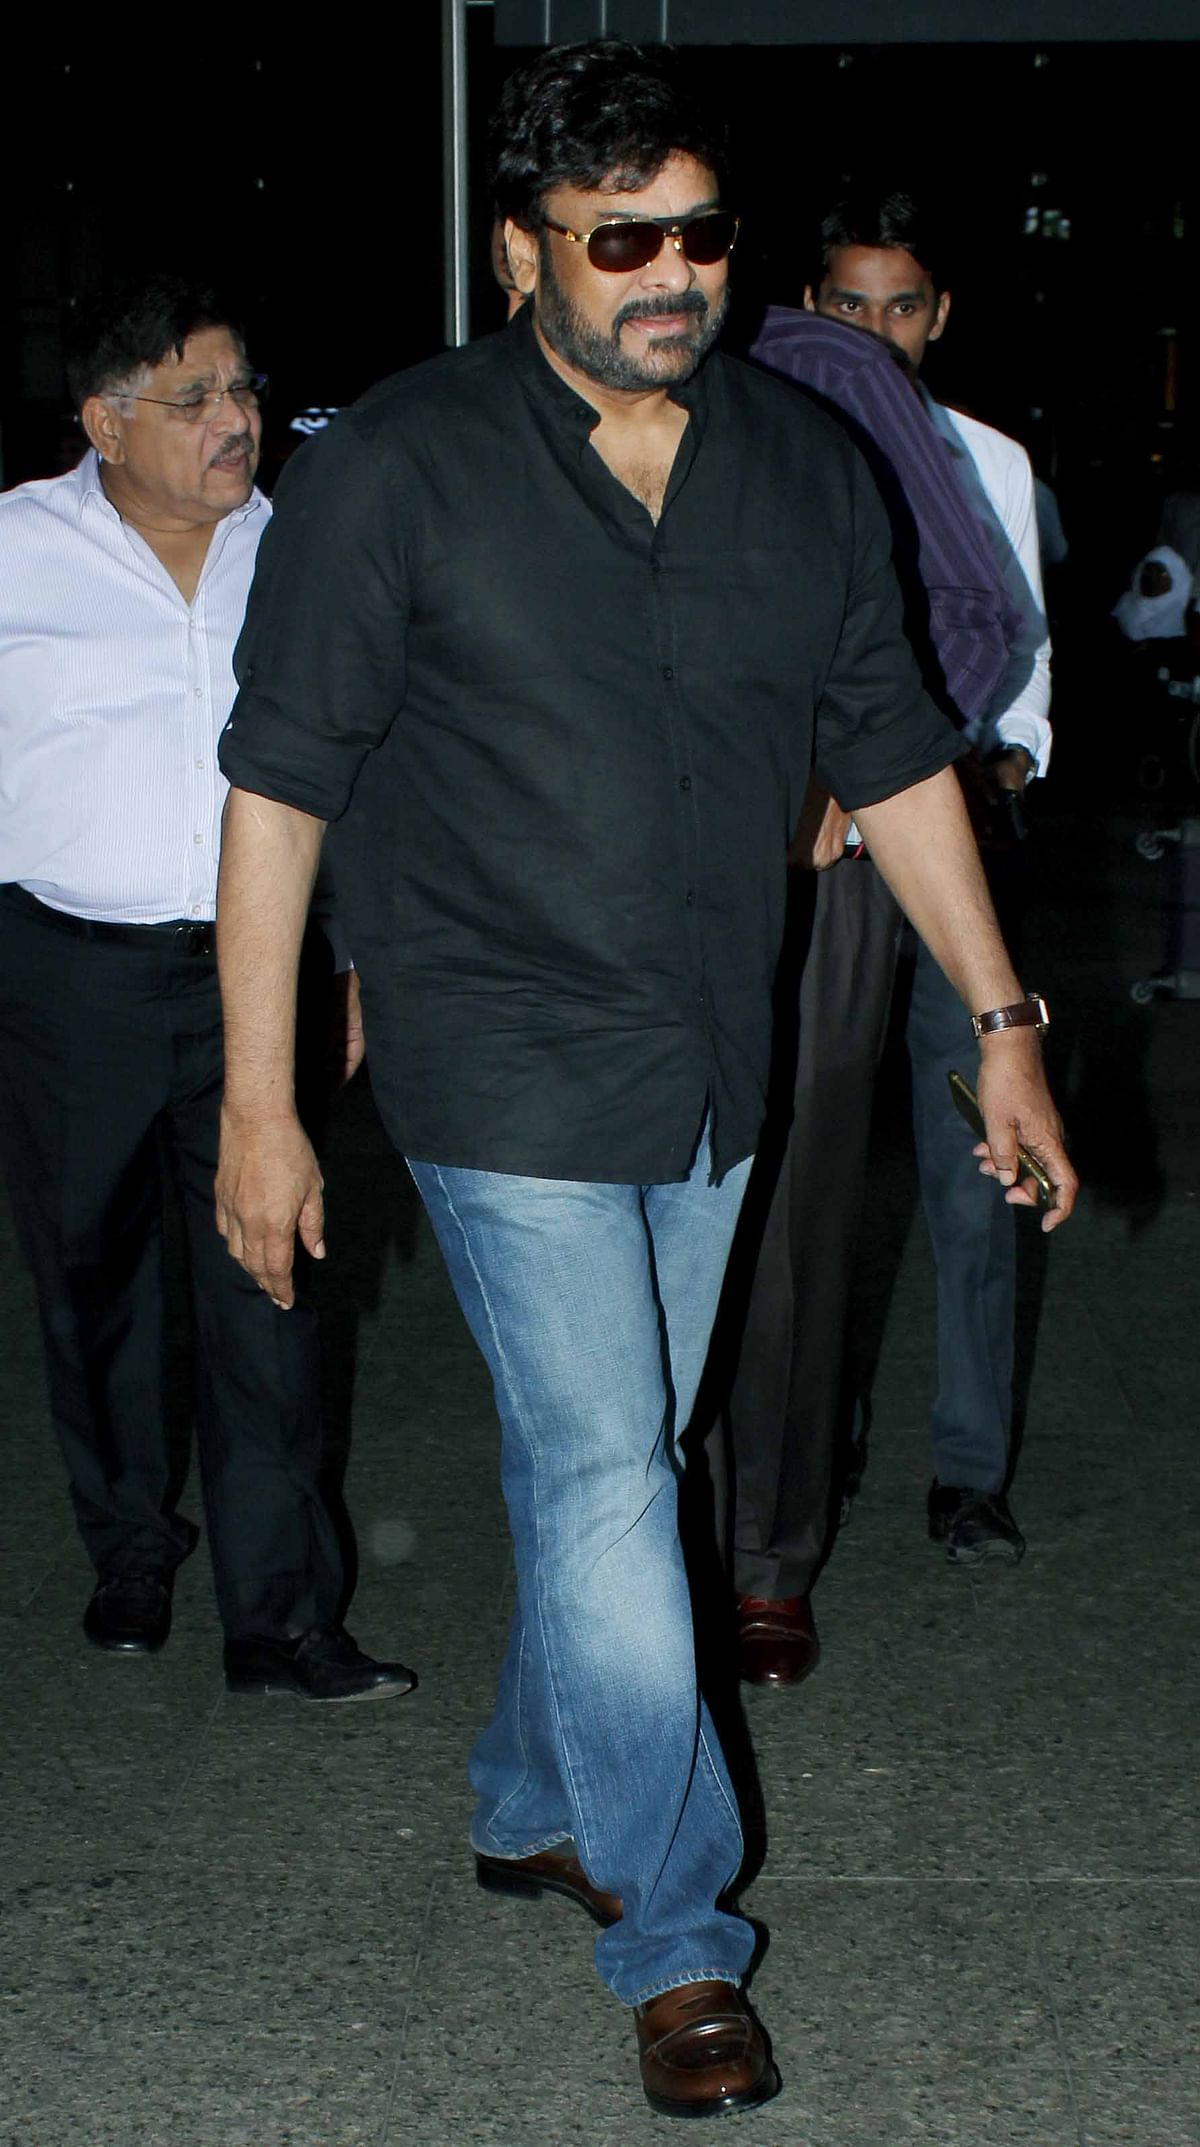 Actor Chiranjeevi also flew into Mumbai recently (Photo: Yogen Shah)